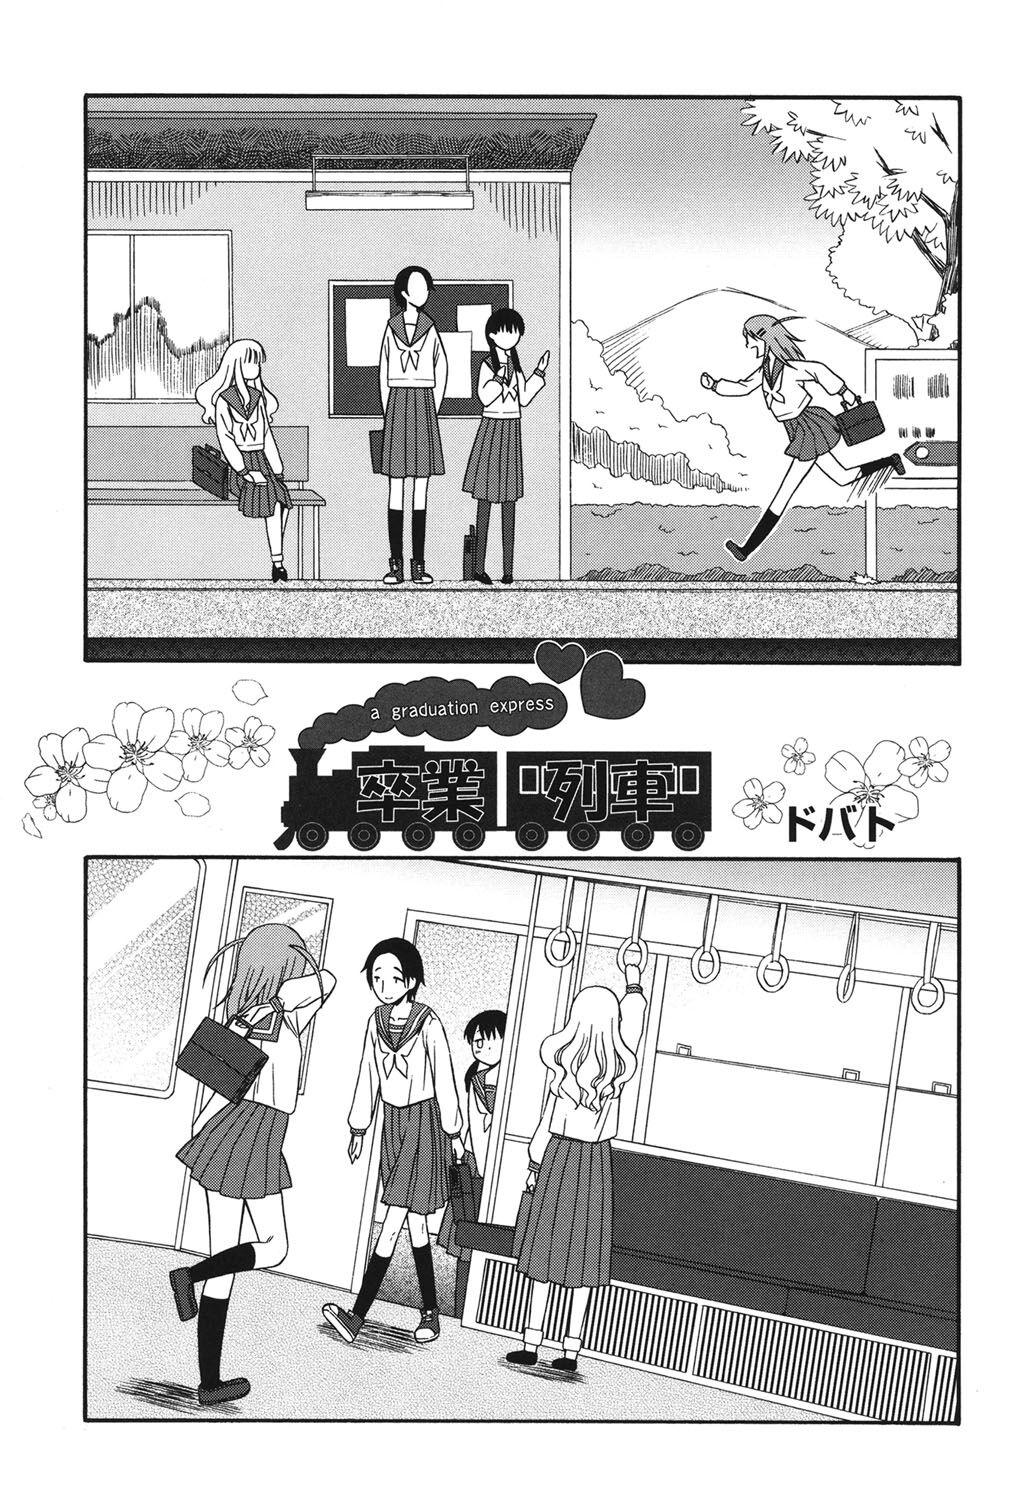 Penis Sucking A Graduation Express - Sotsugyō Ressha Bisex - Page 1